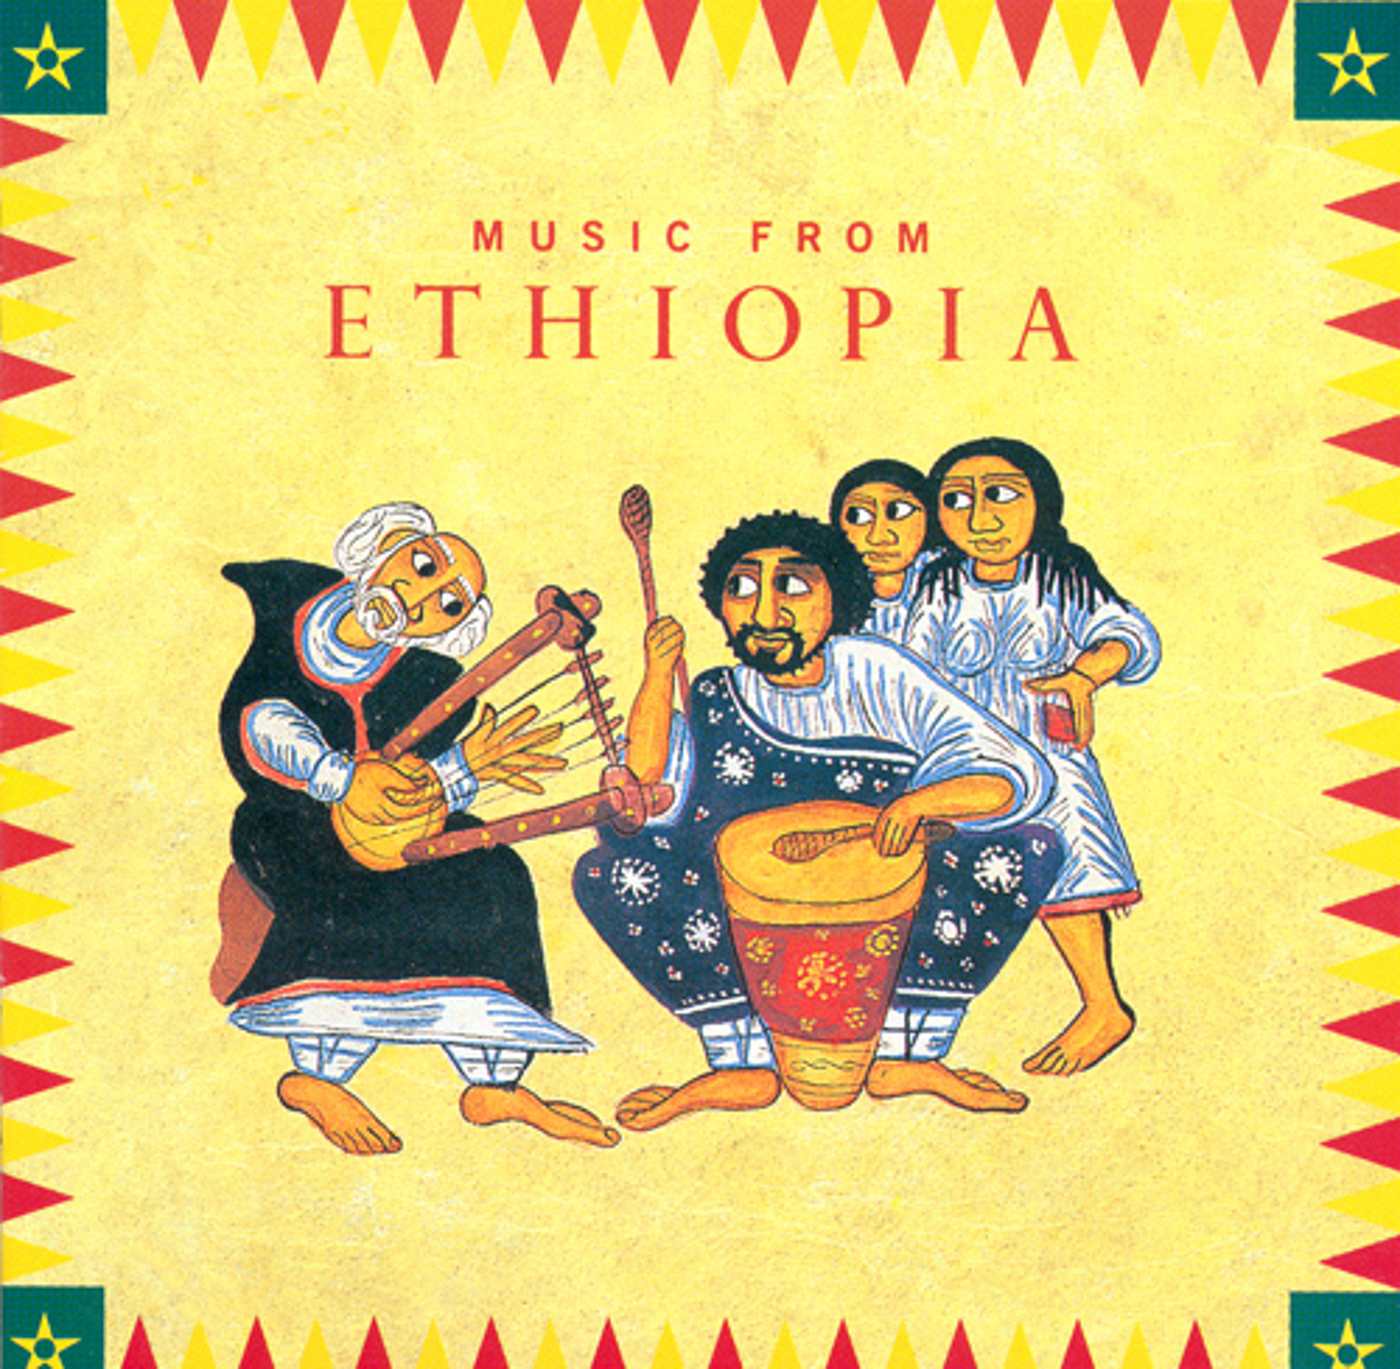 ethiopian classical instrumental music mp3 free download